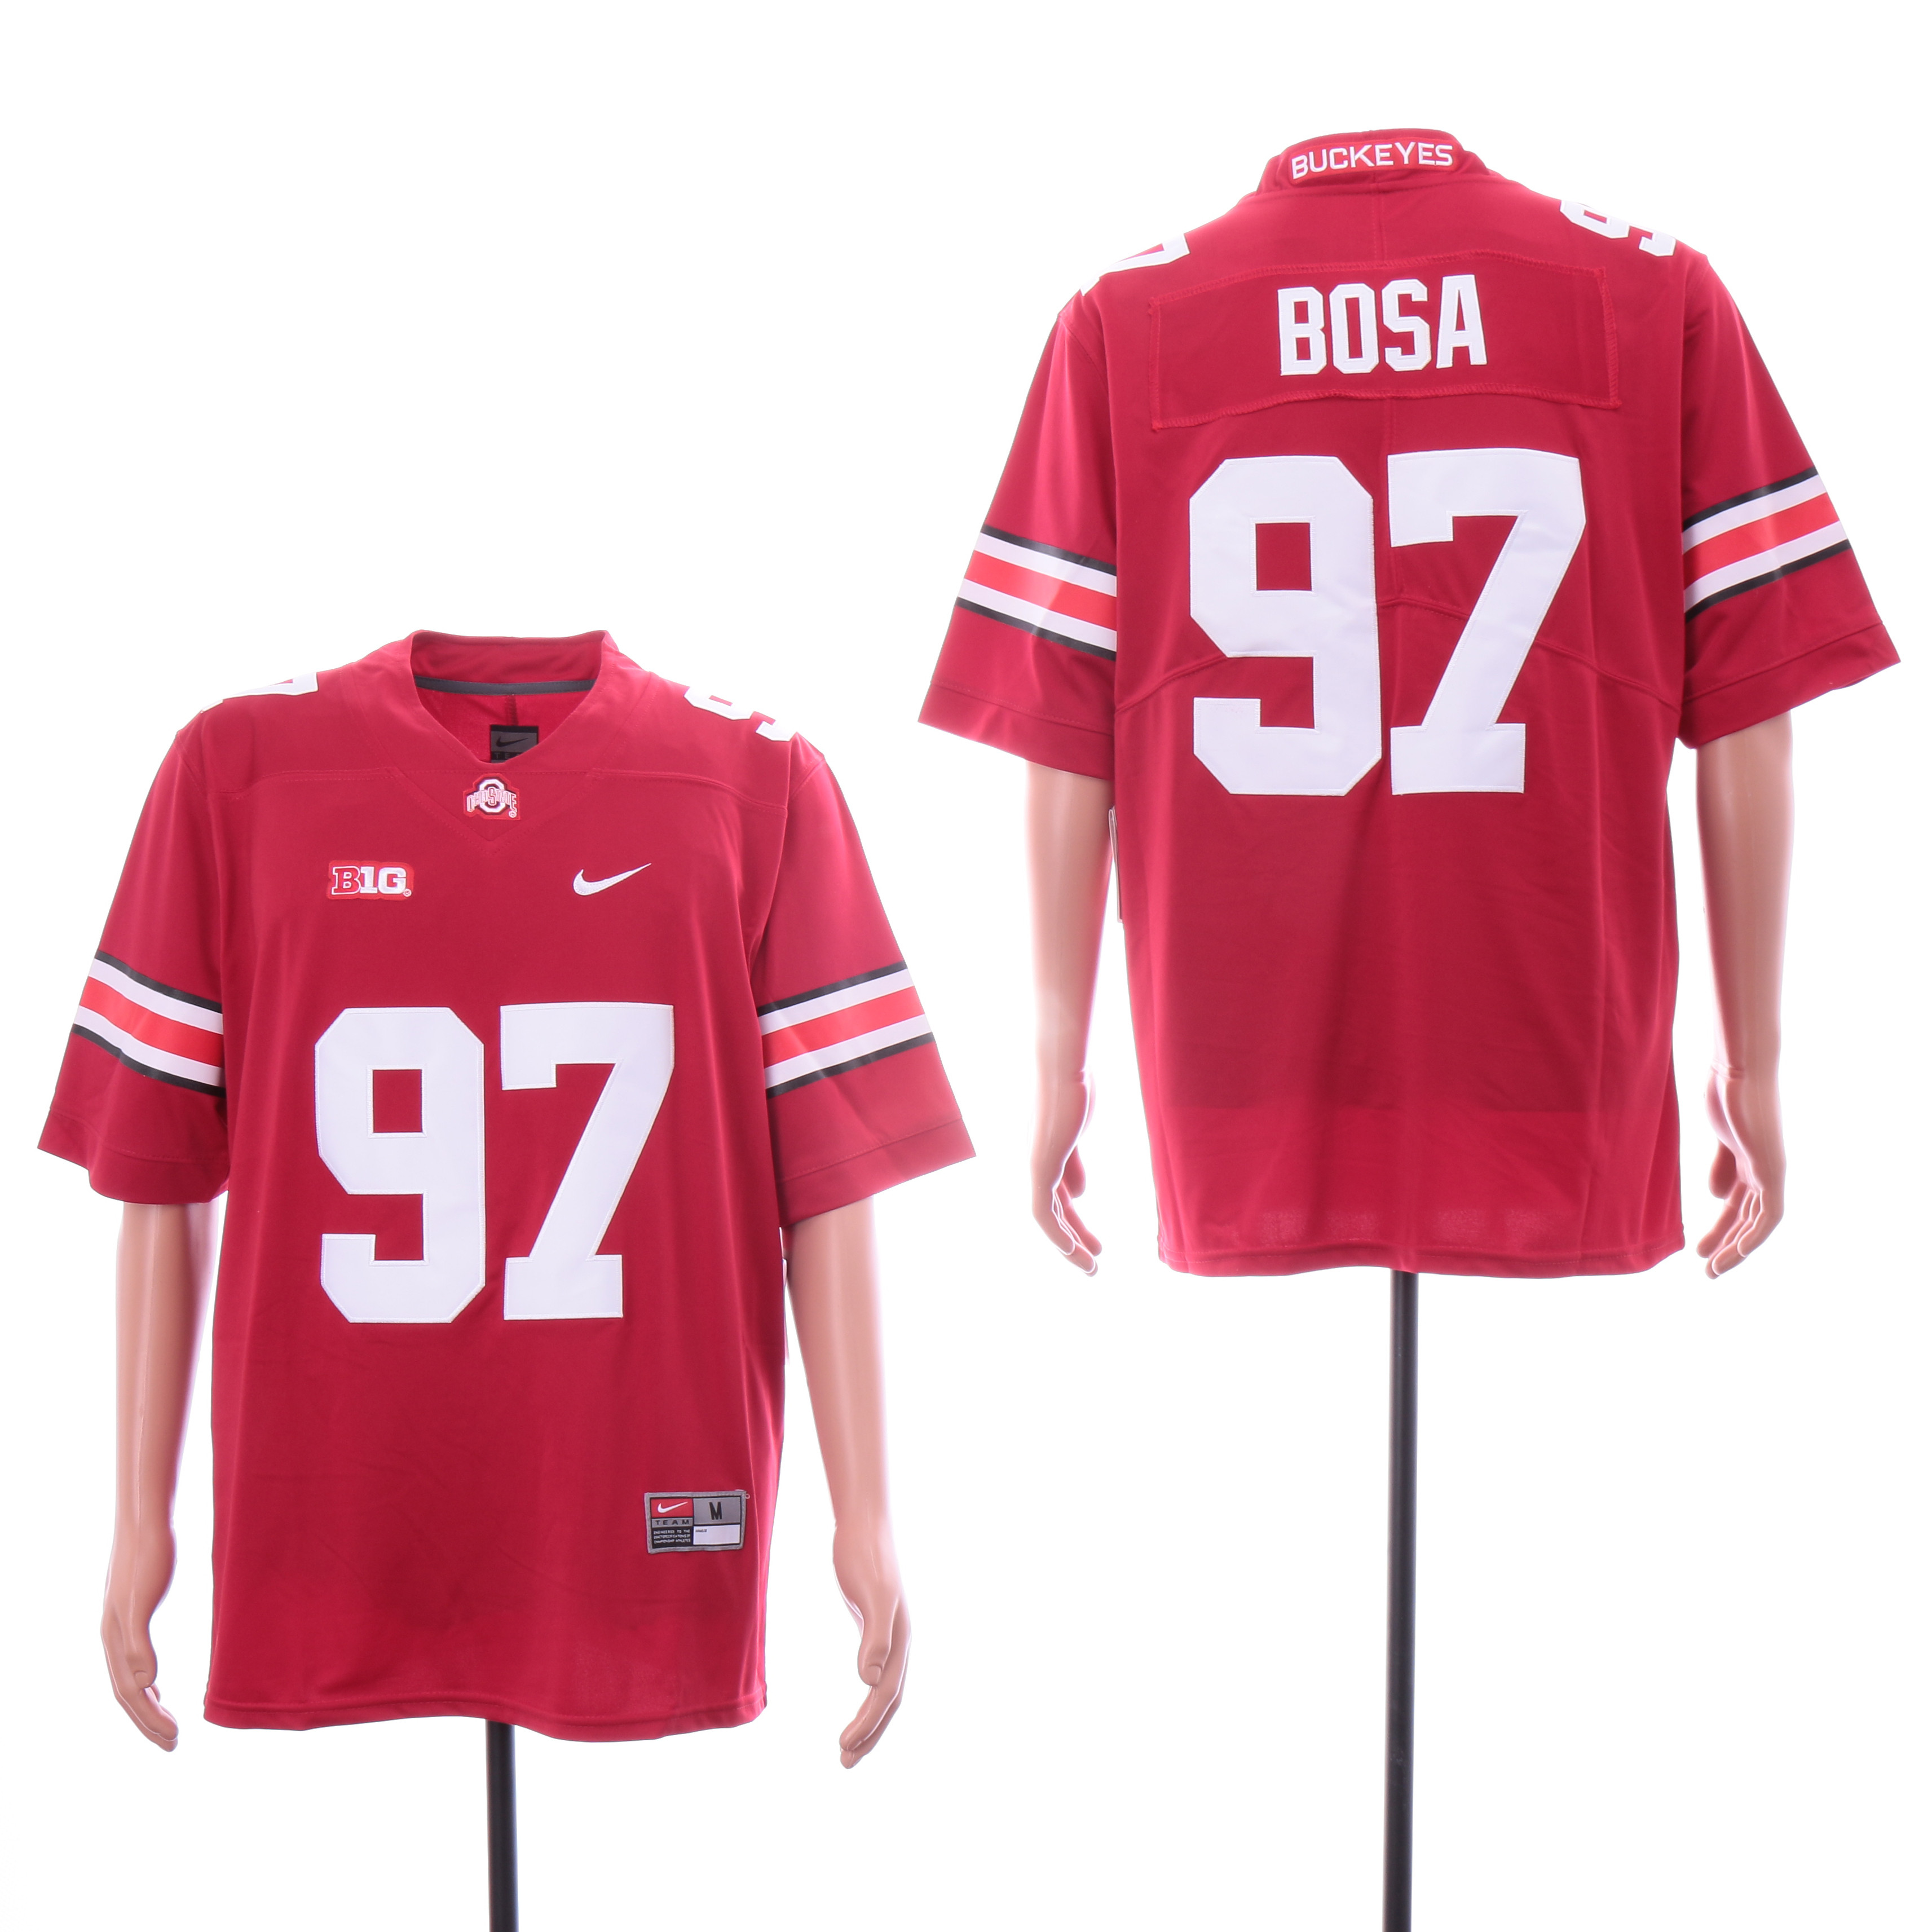 Ohio State Buckeyes 97 Joey Bosa Red Nike College Football Jersey